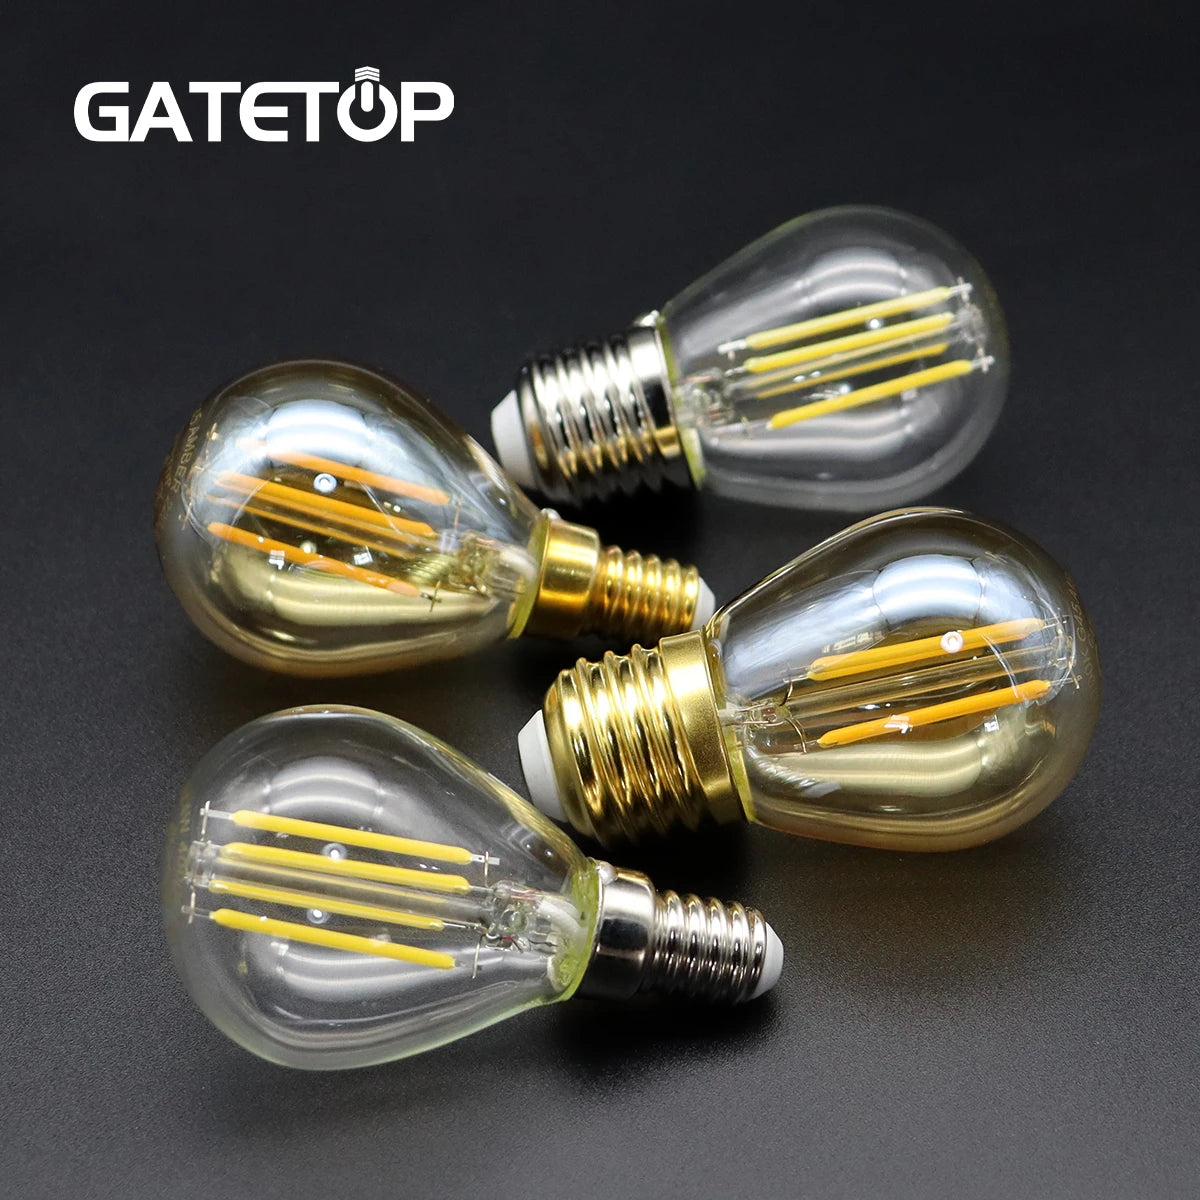 Flash Deals G45 4w Retro Edison Filament Bulb E14 E27 Bombillas 220v Vintage Lamp 6pcs/lot Gold Clear Glass Inner Decoration